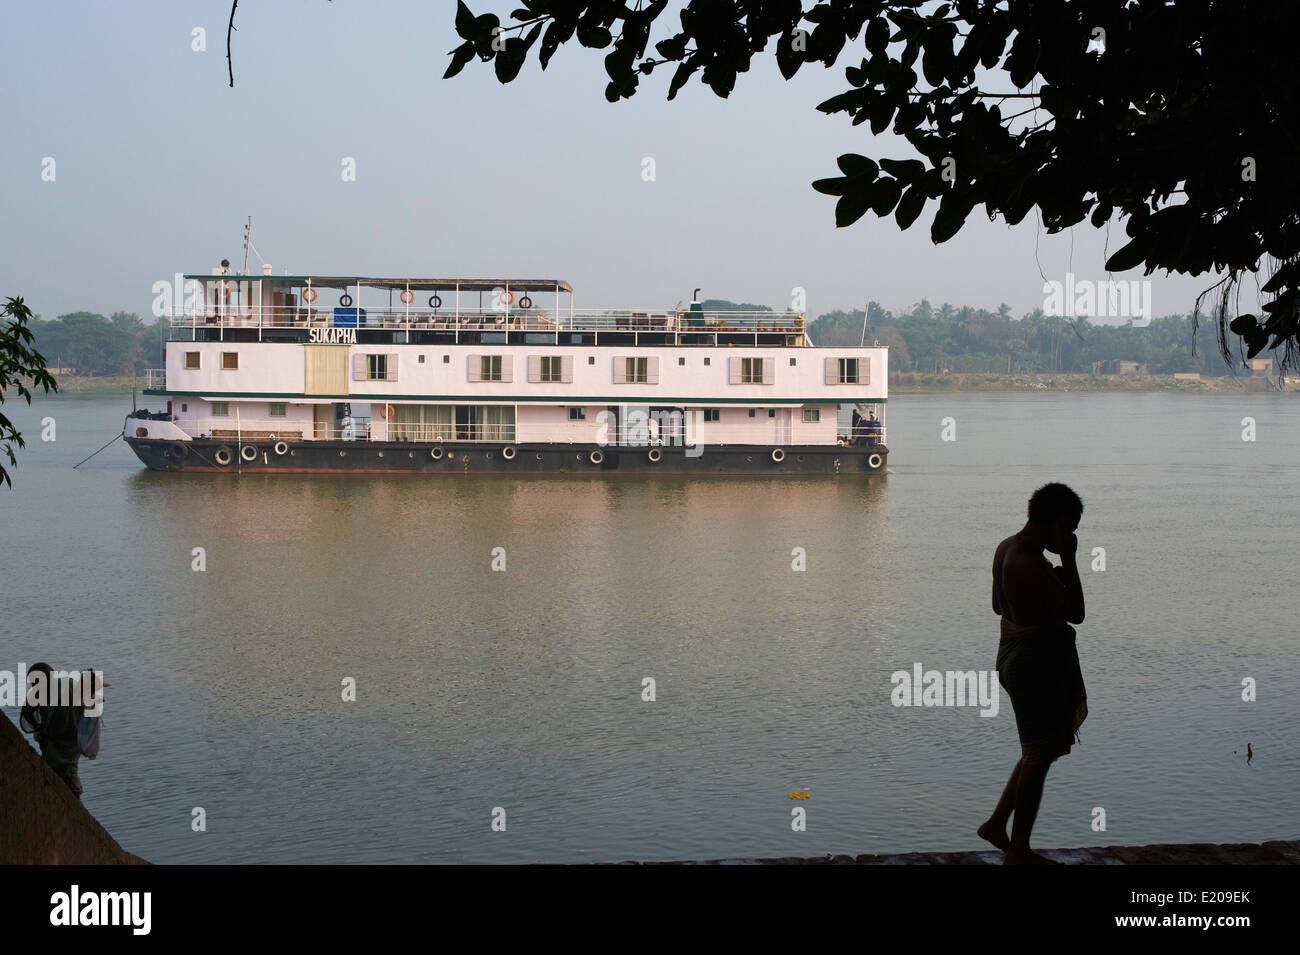 Indien, Westbengalen, Sukapha Boot am Fluss Hooghly, Teil des Ganges Fluß Stockfoto